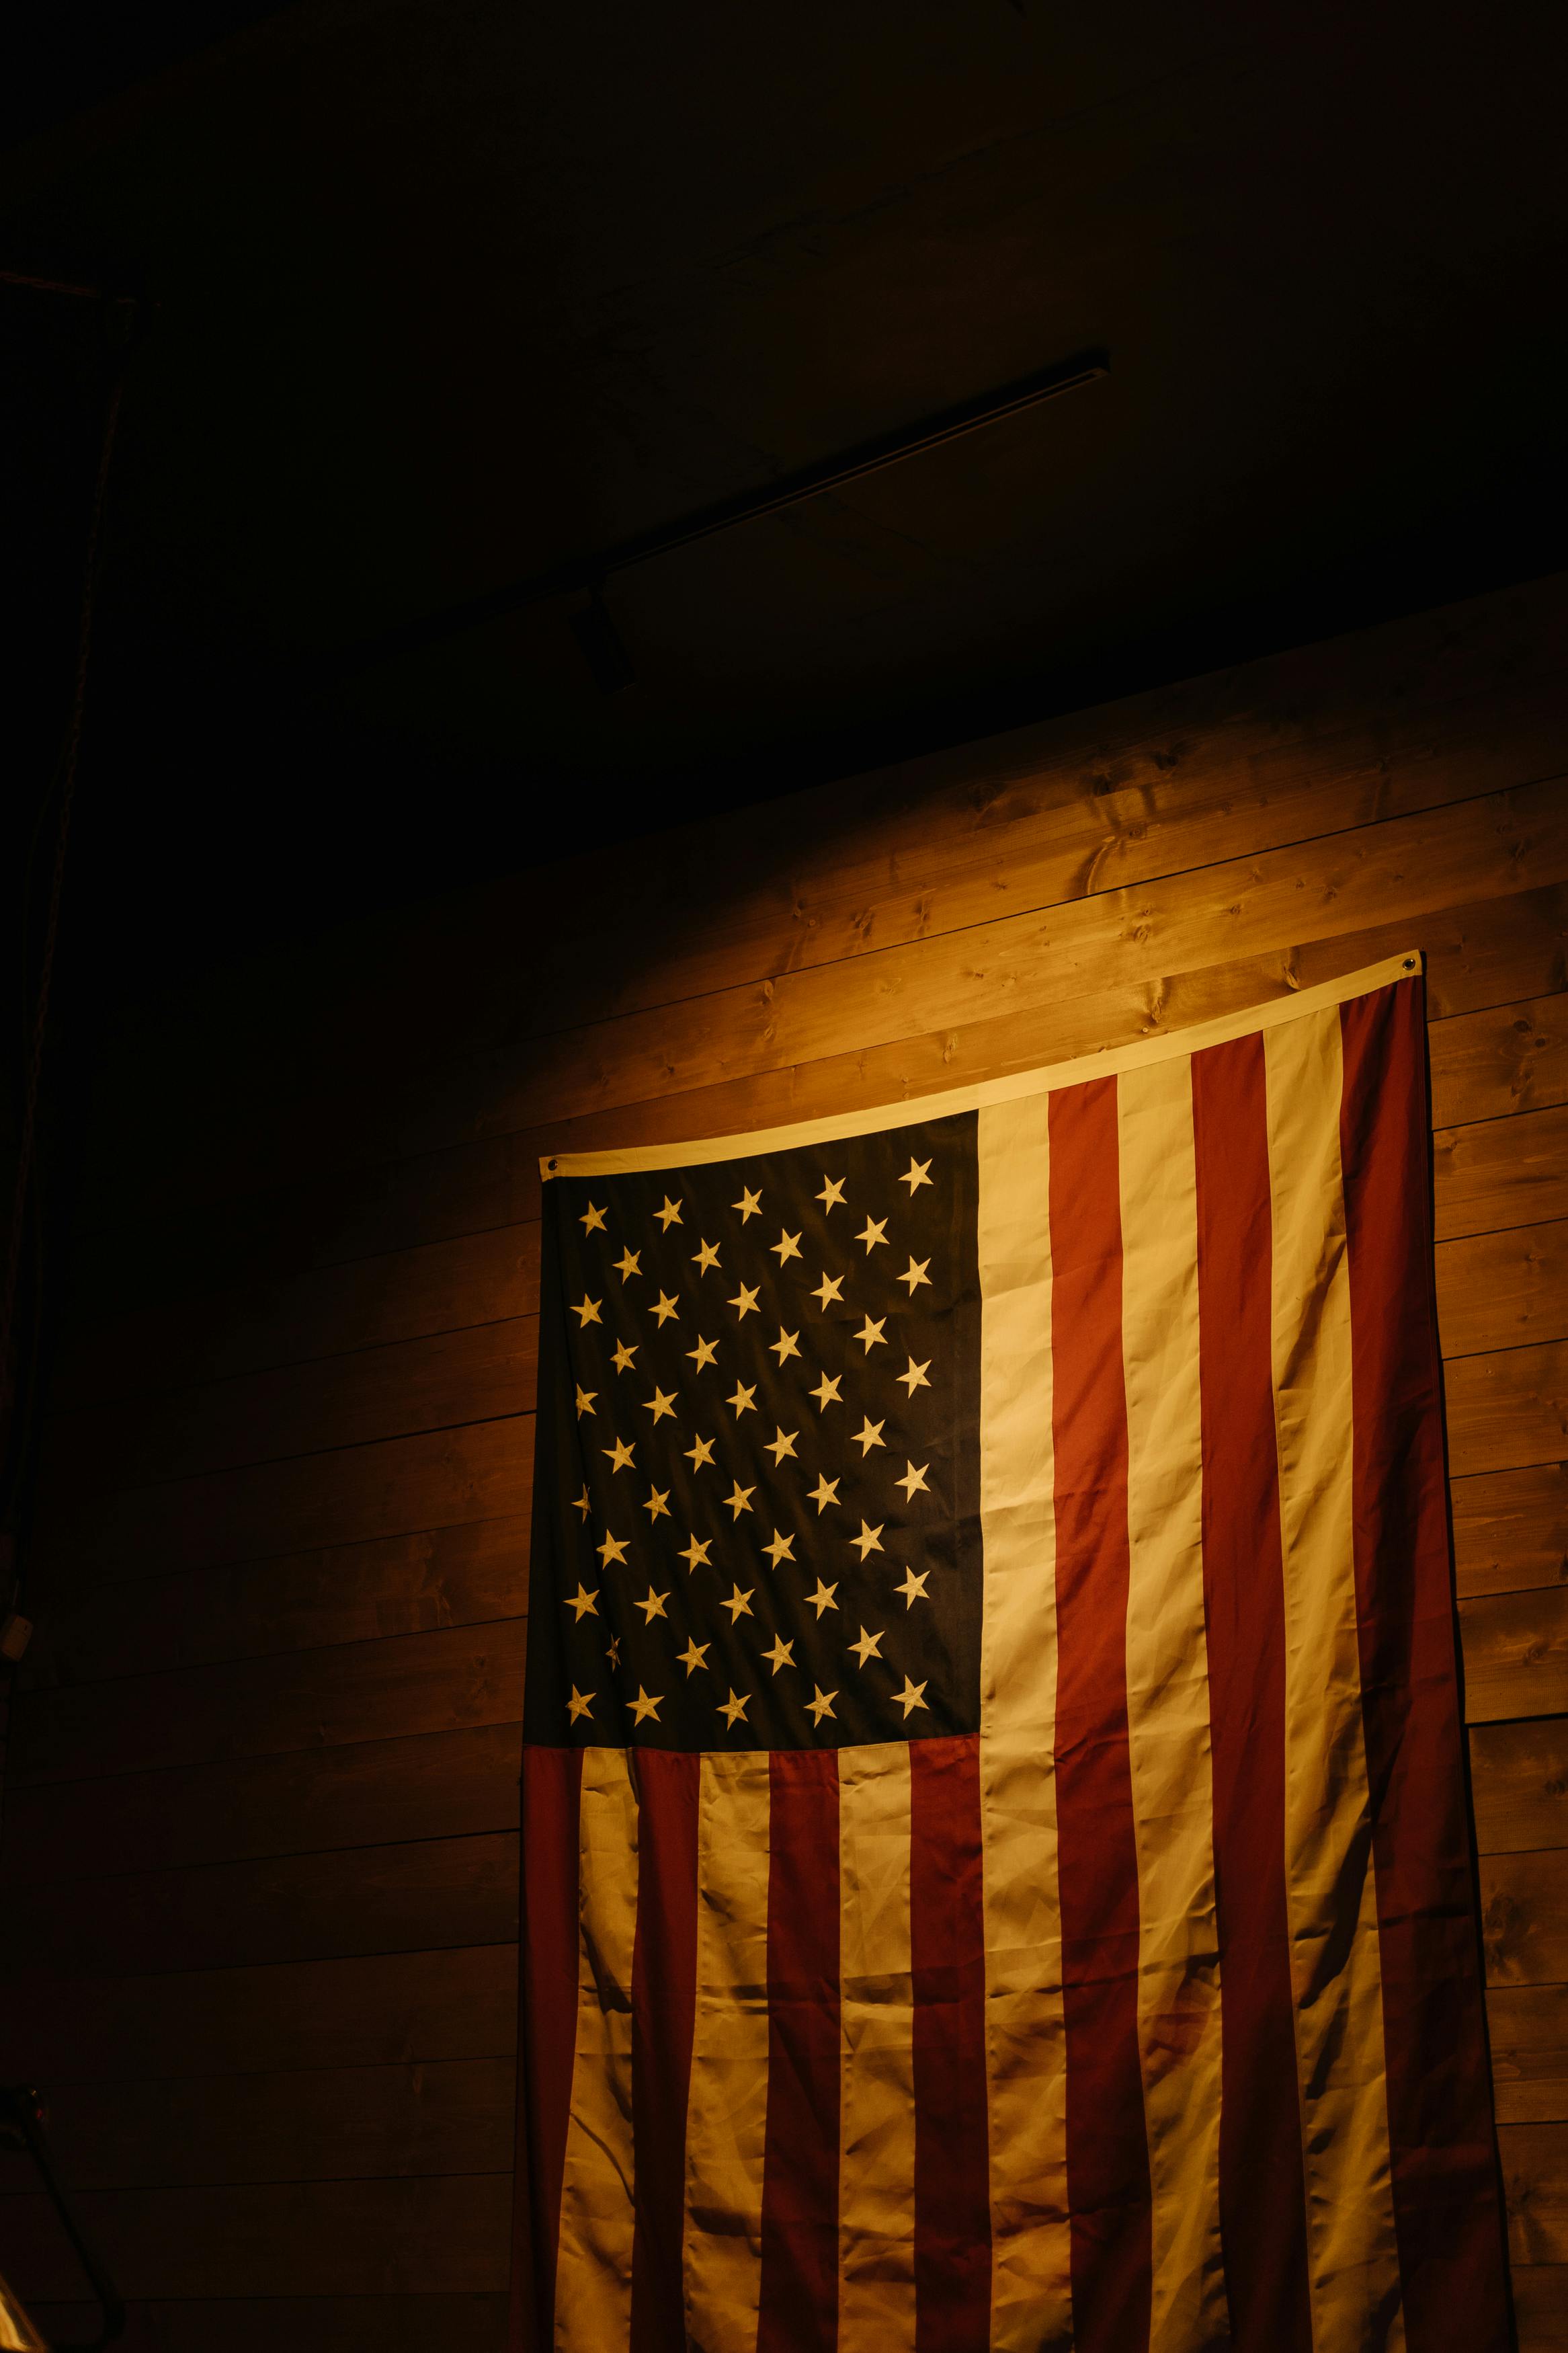 USA Flag Handdrawn in Black and Red Dark Spectacular Mobile Phone  Wallpaper Patriotic Vertical Background or Backdrop Stock Illustration   Illustration of united states 218407089